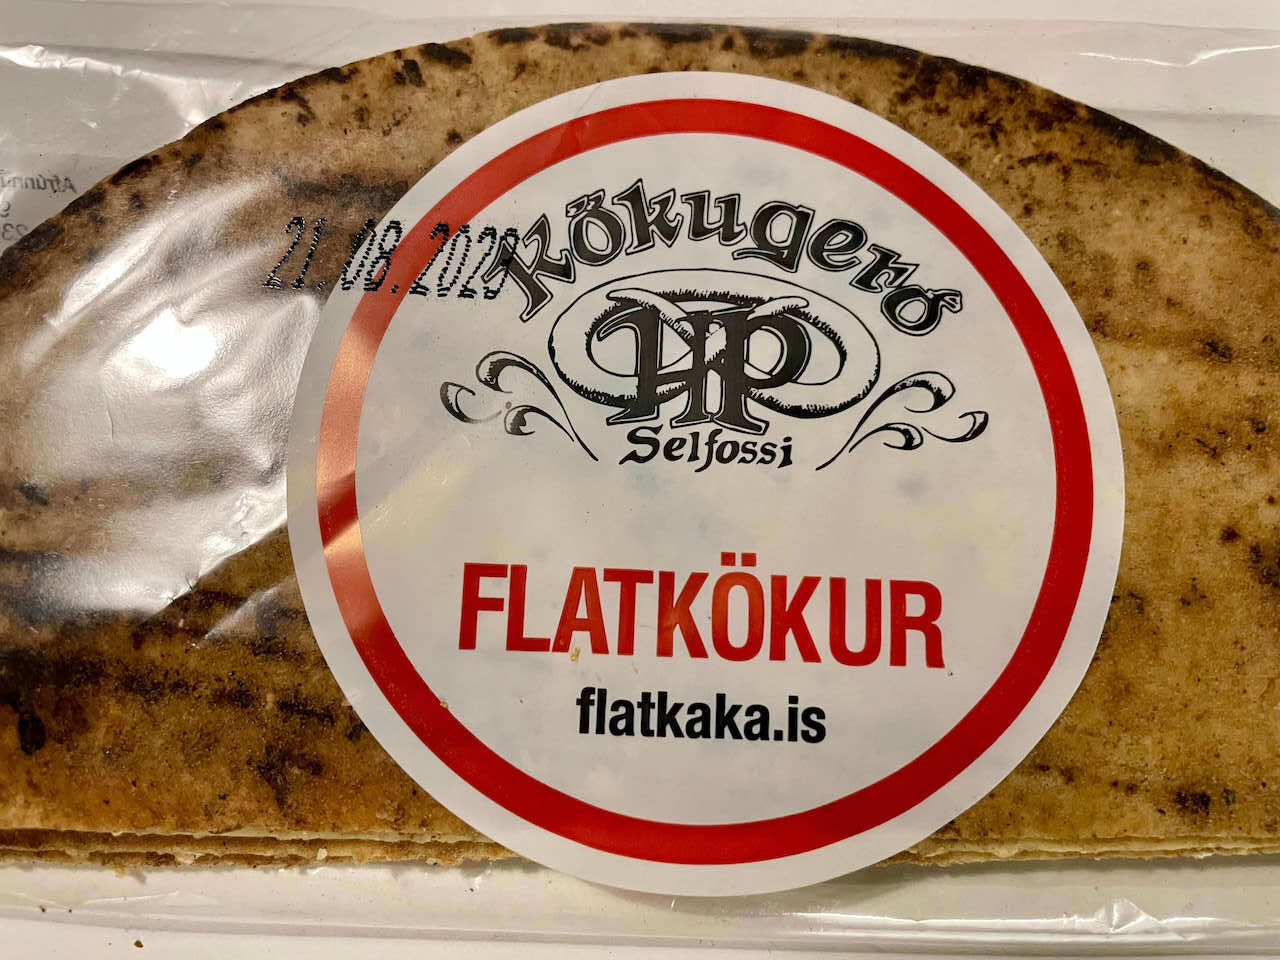 Iceland, Höfn - Flat bread